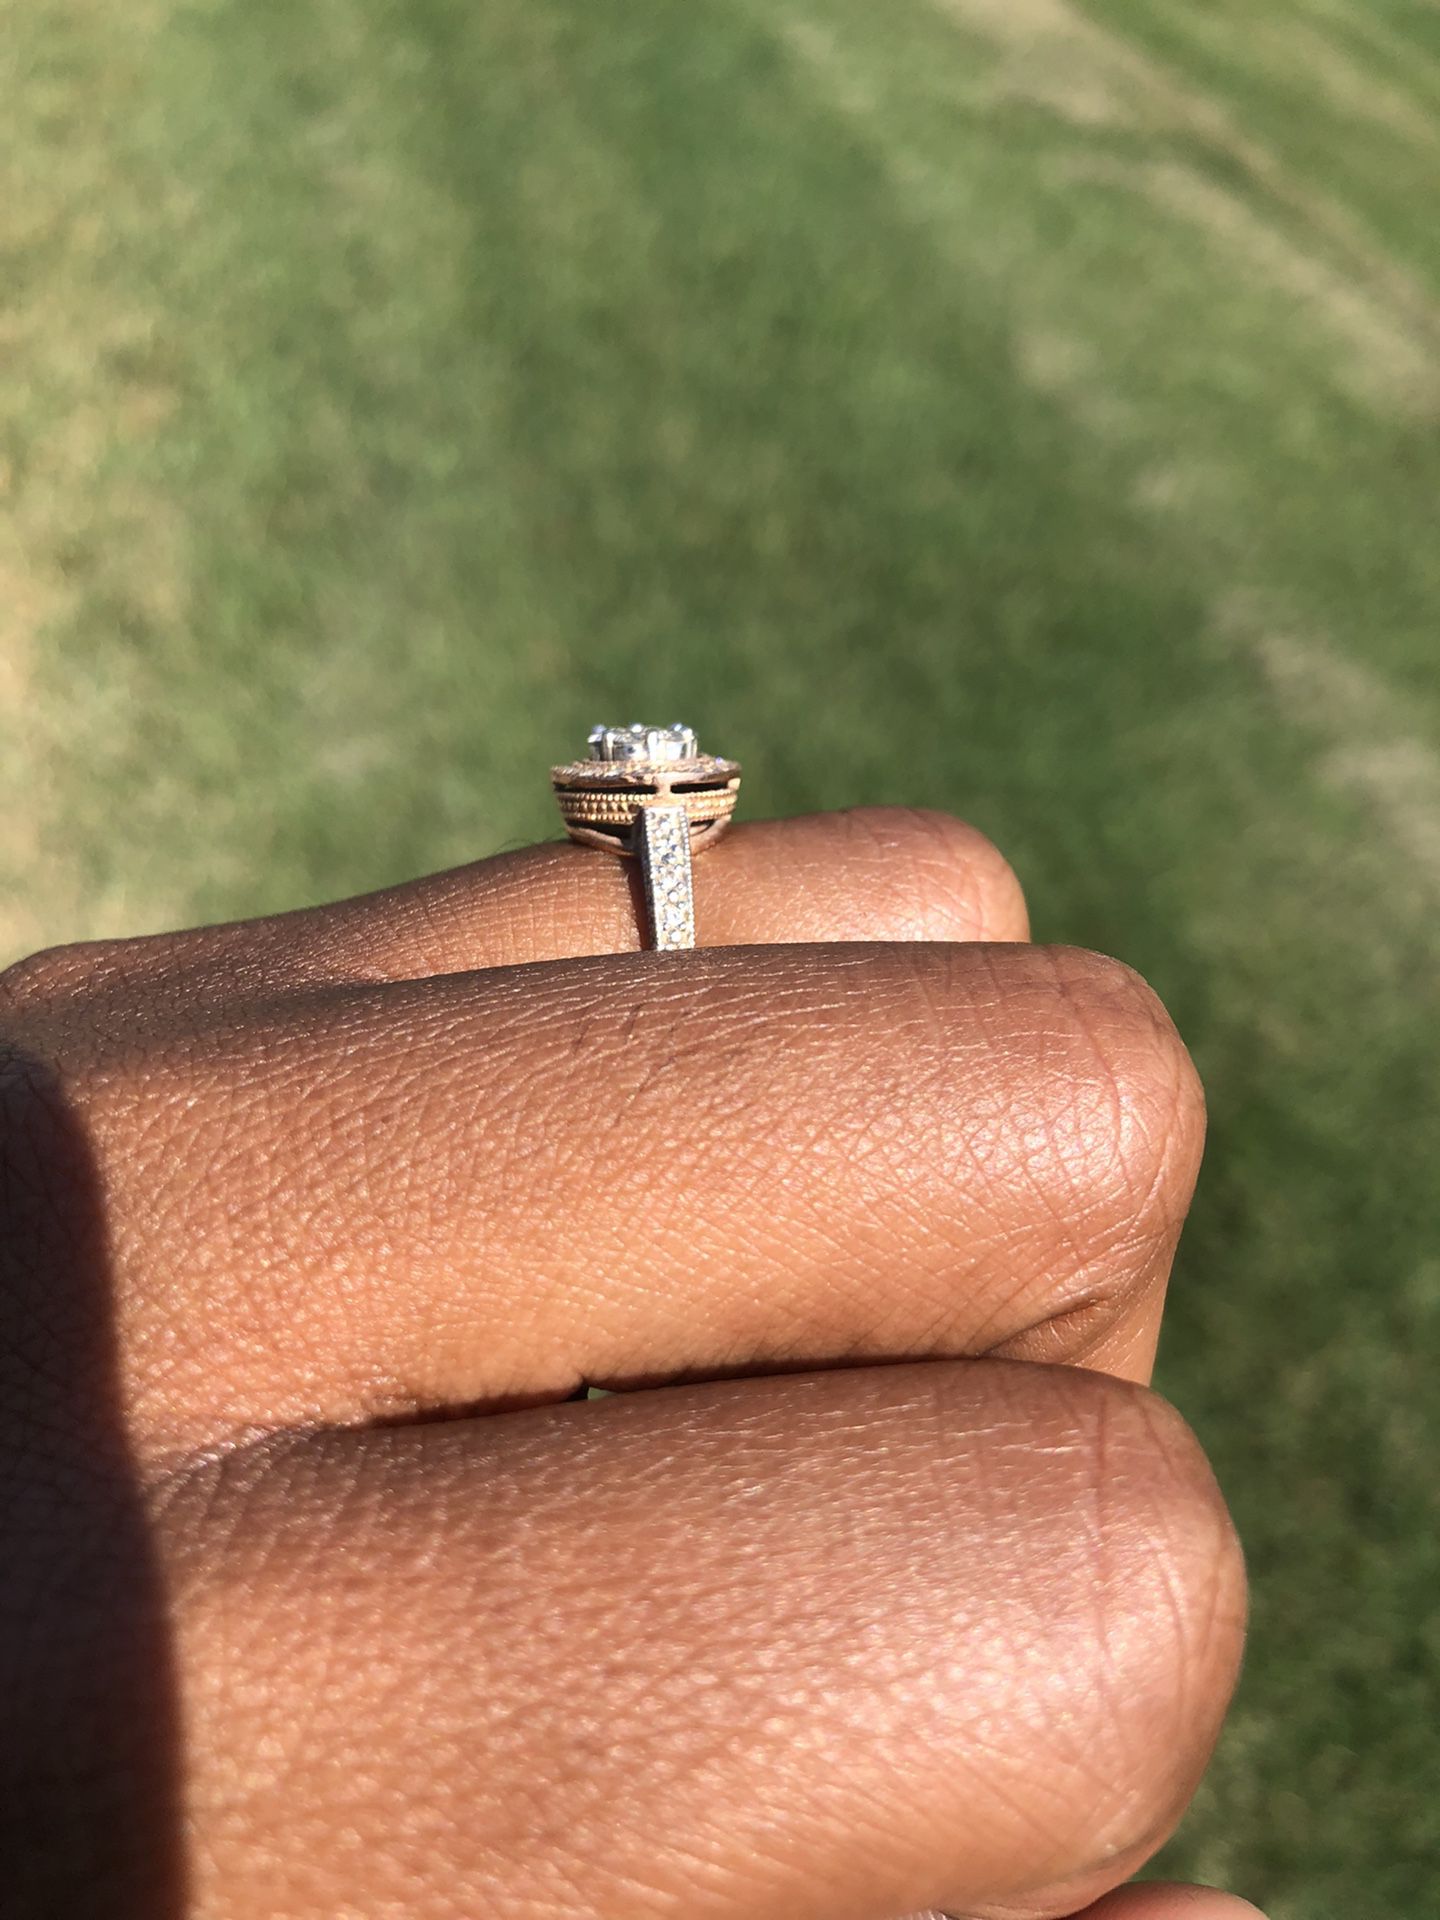 Gorgeous Rose Gold Engagement/ Wedding Ring